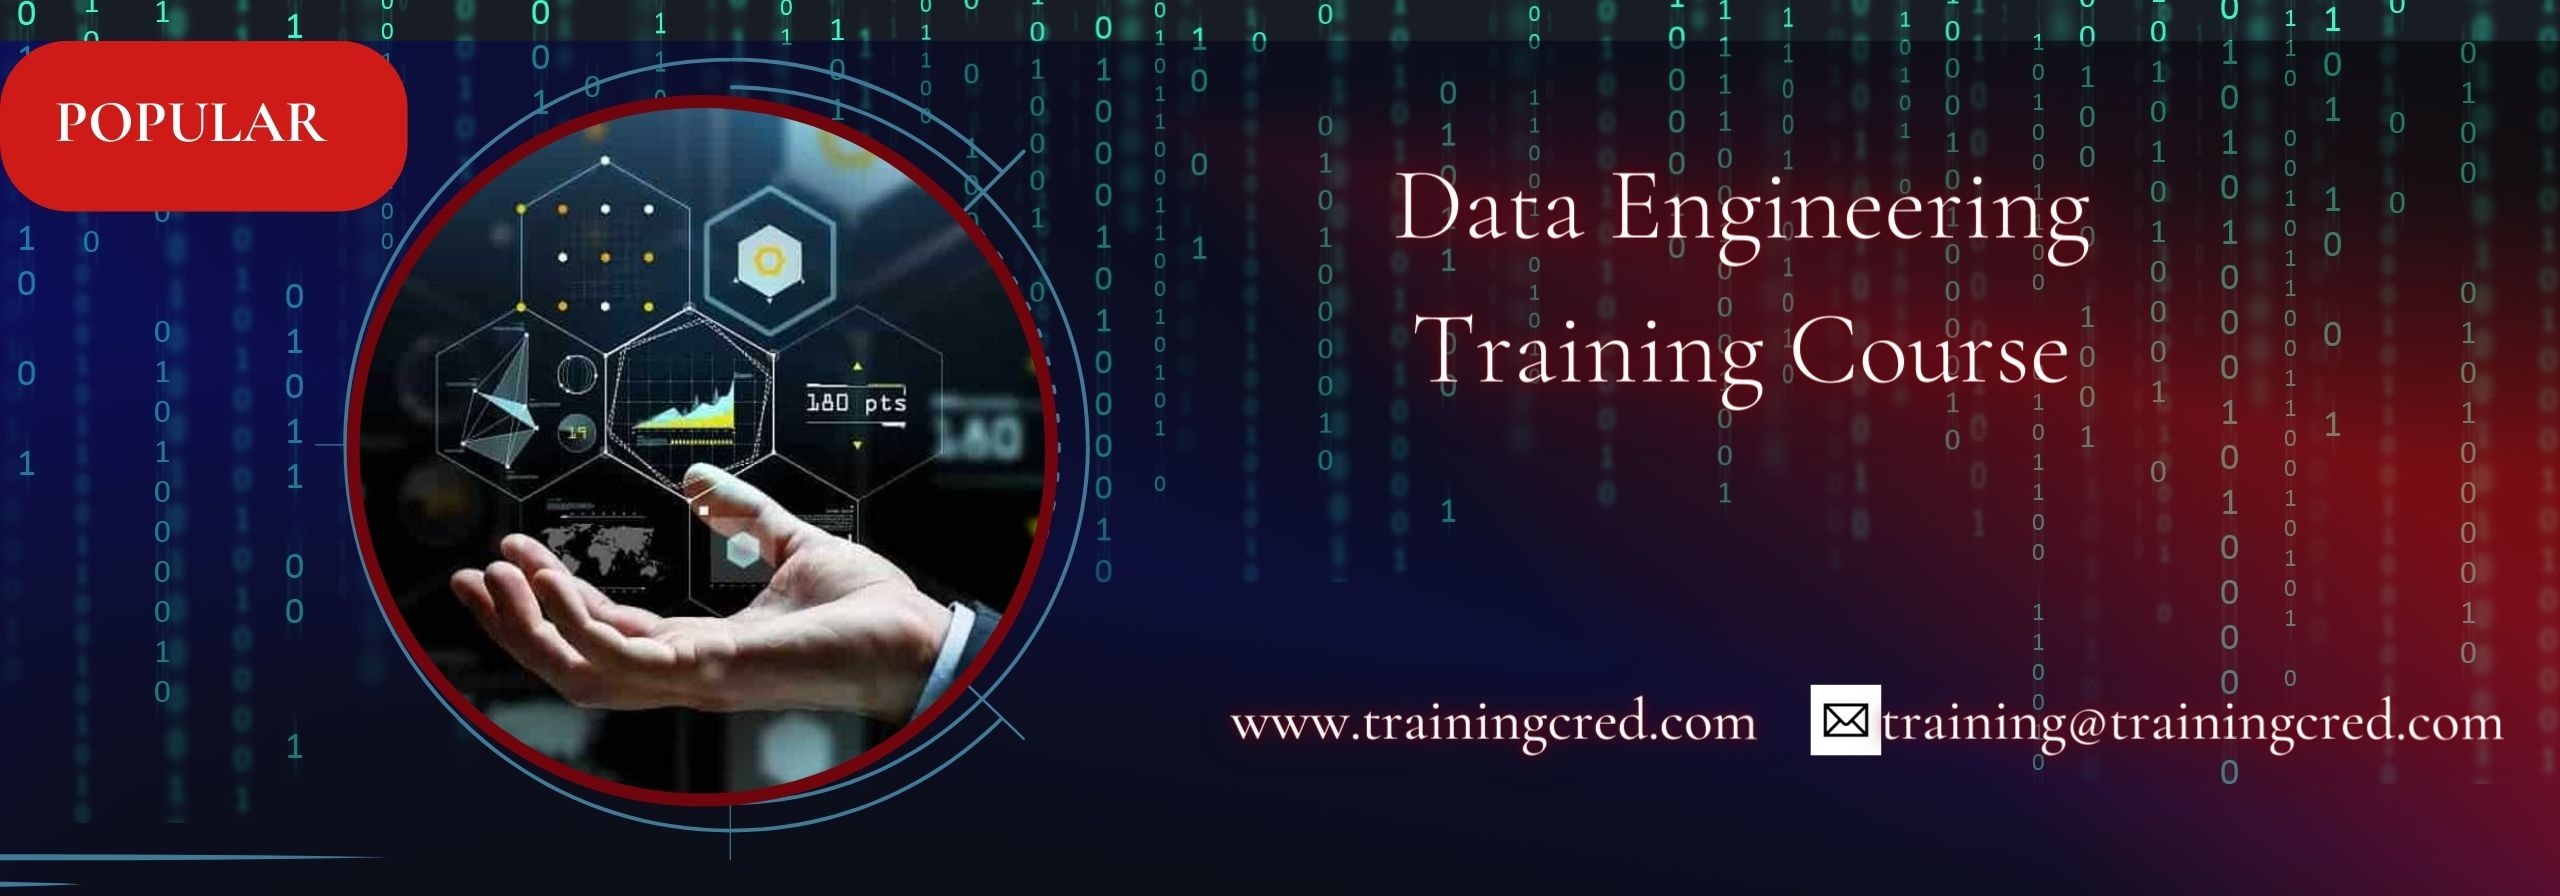 Data Engineering Training